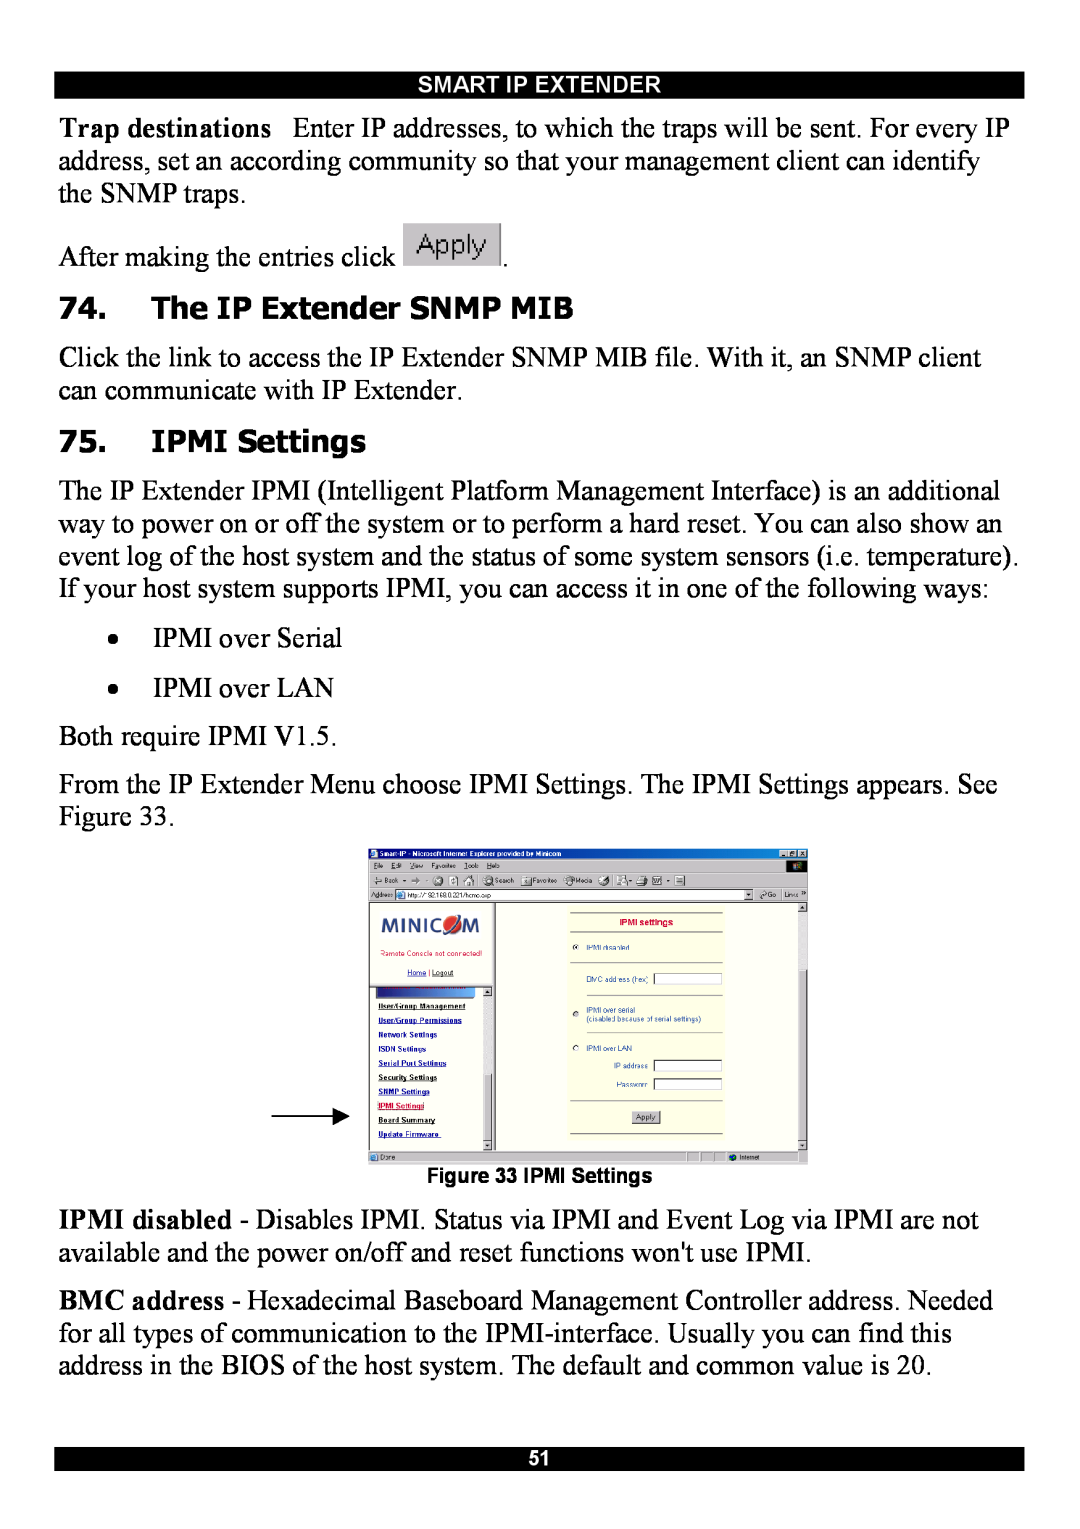 Minicom Advanced Systems Smart IP Extender manual The IP Extender SNMP MIB, IPMI Settings 